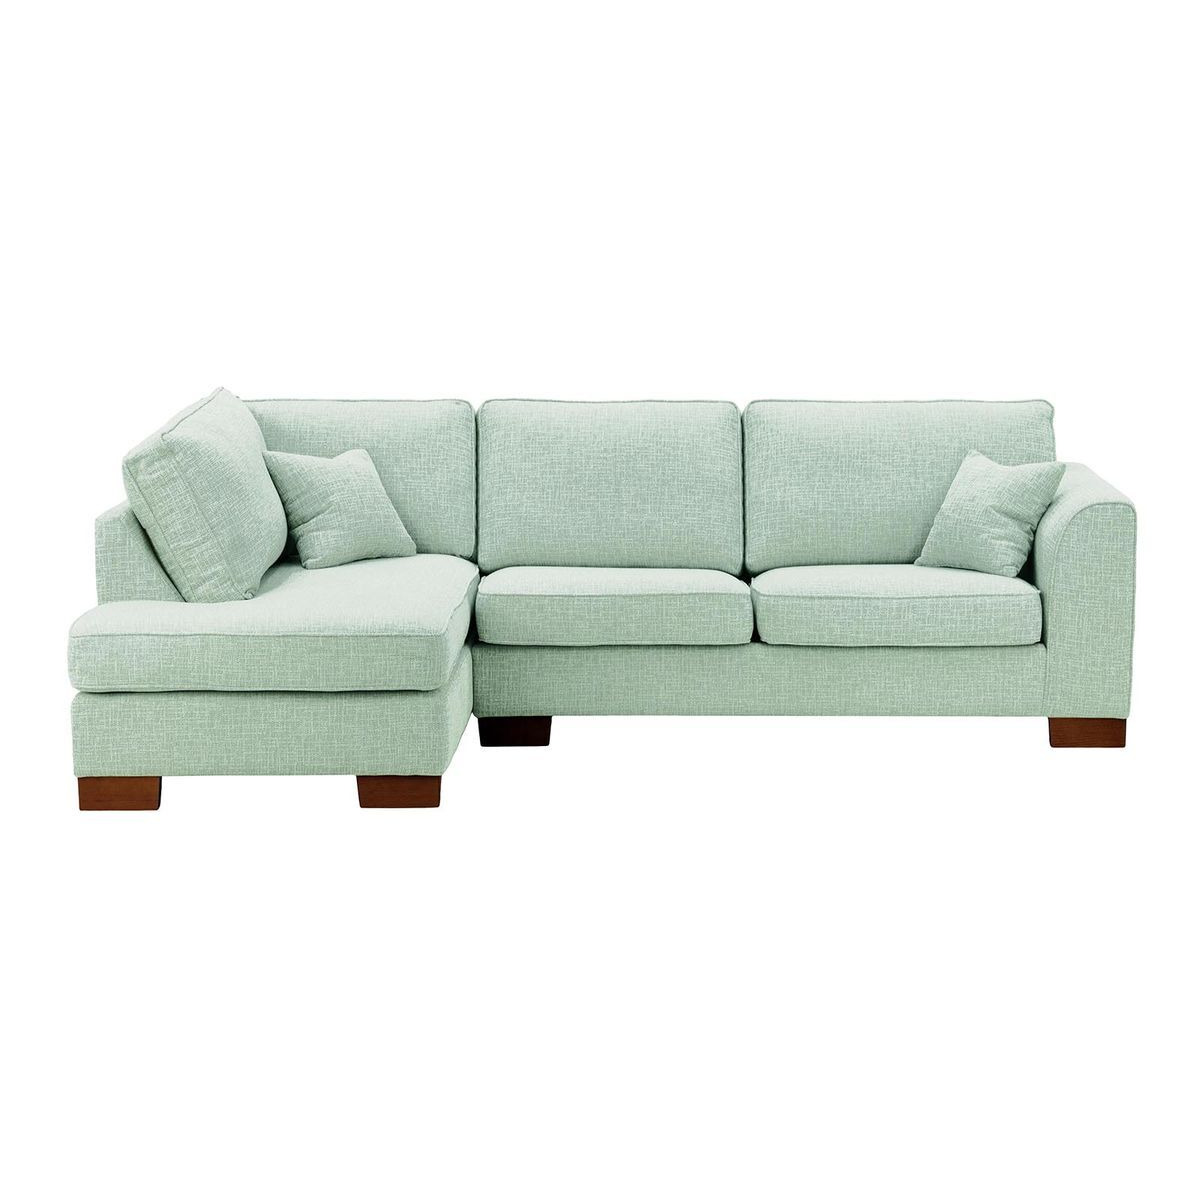 Avos Large Left Hand Corner Sofa, dirty blue, Leg colour: like oak - image 1